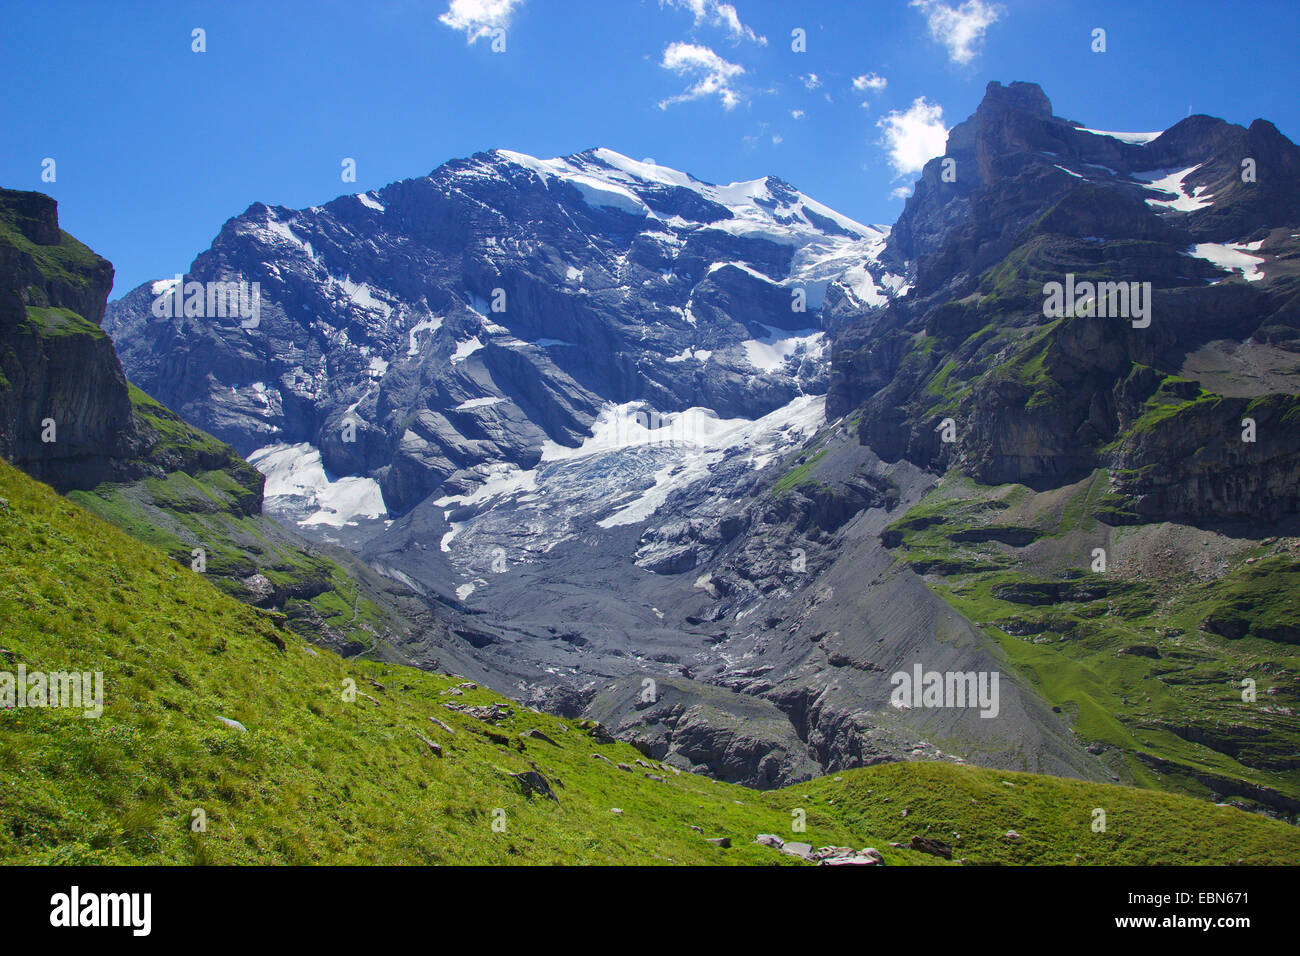 Bluemlisalp seen from the upper Kien Valley, Switzerland Stock Photo